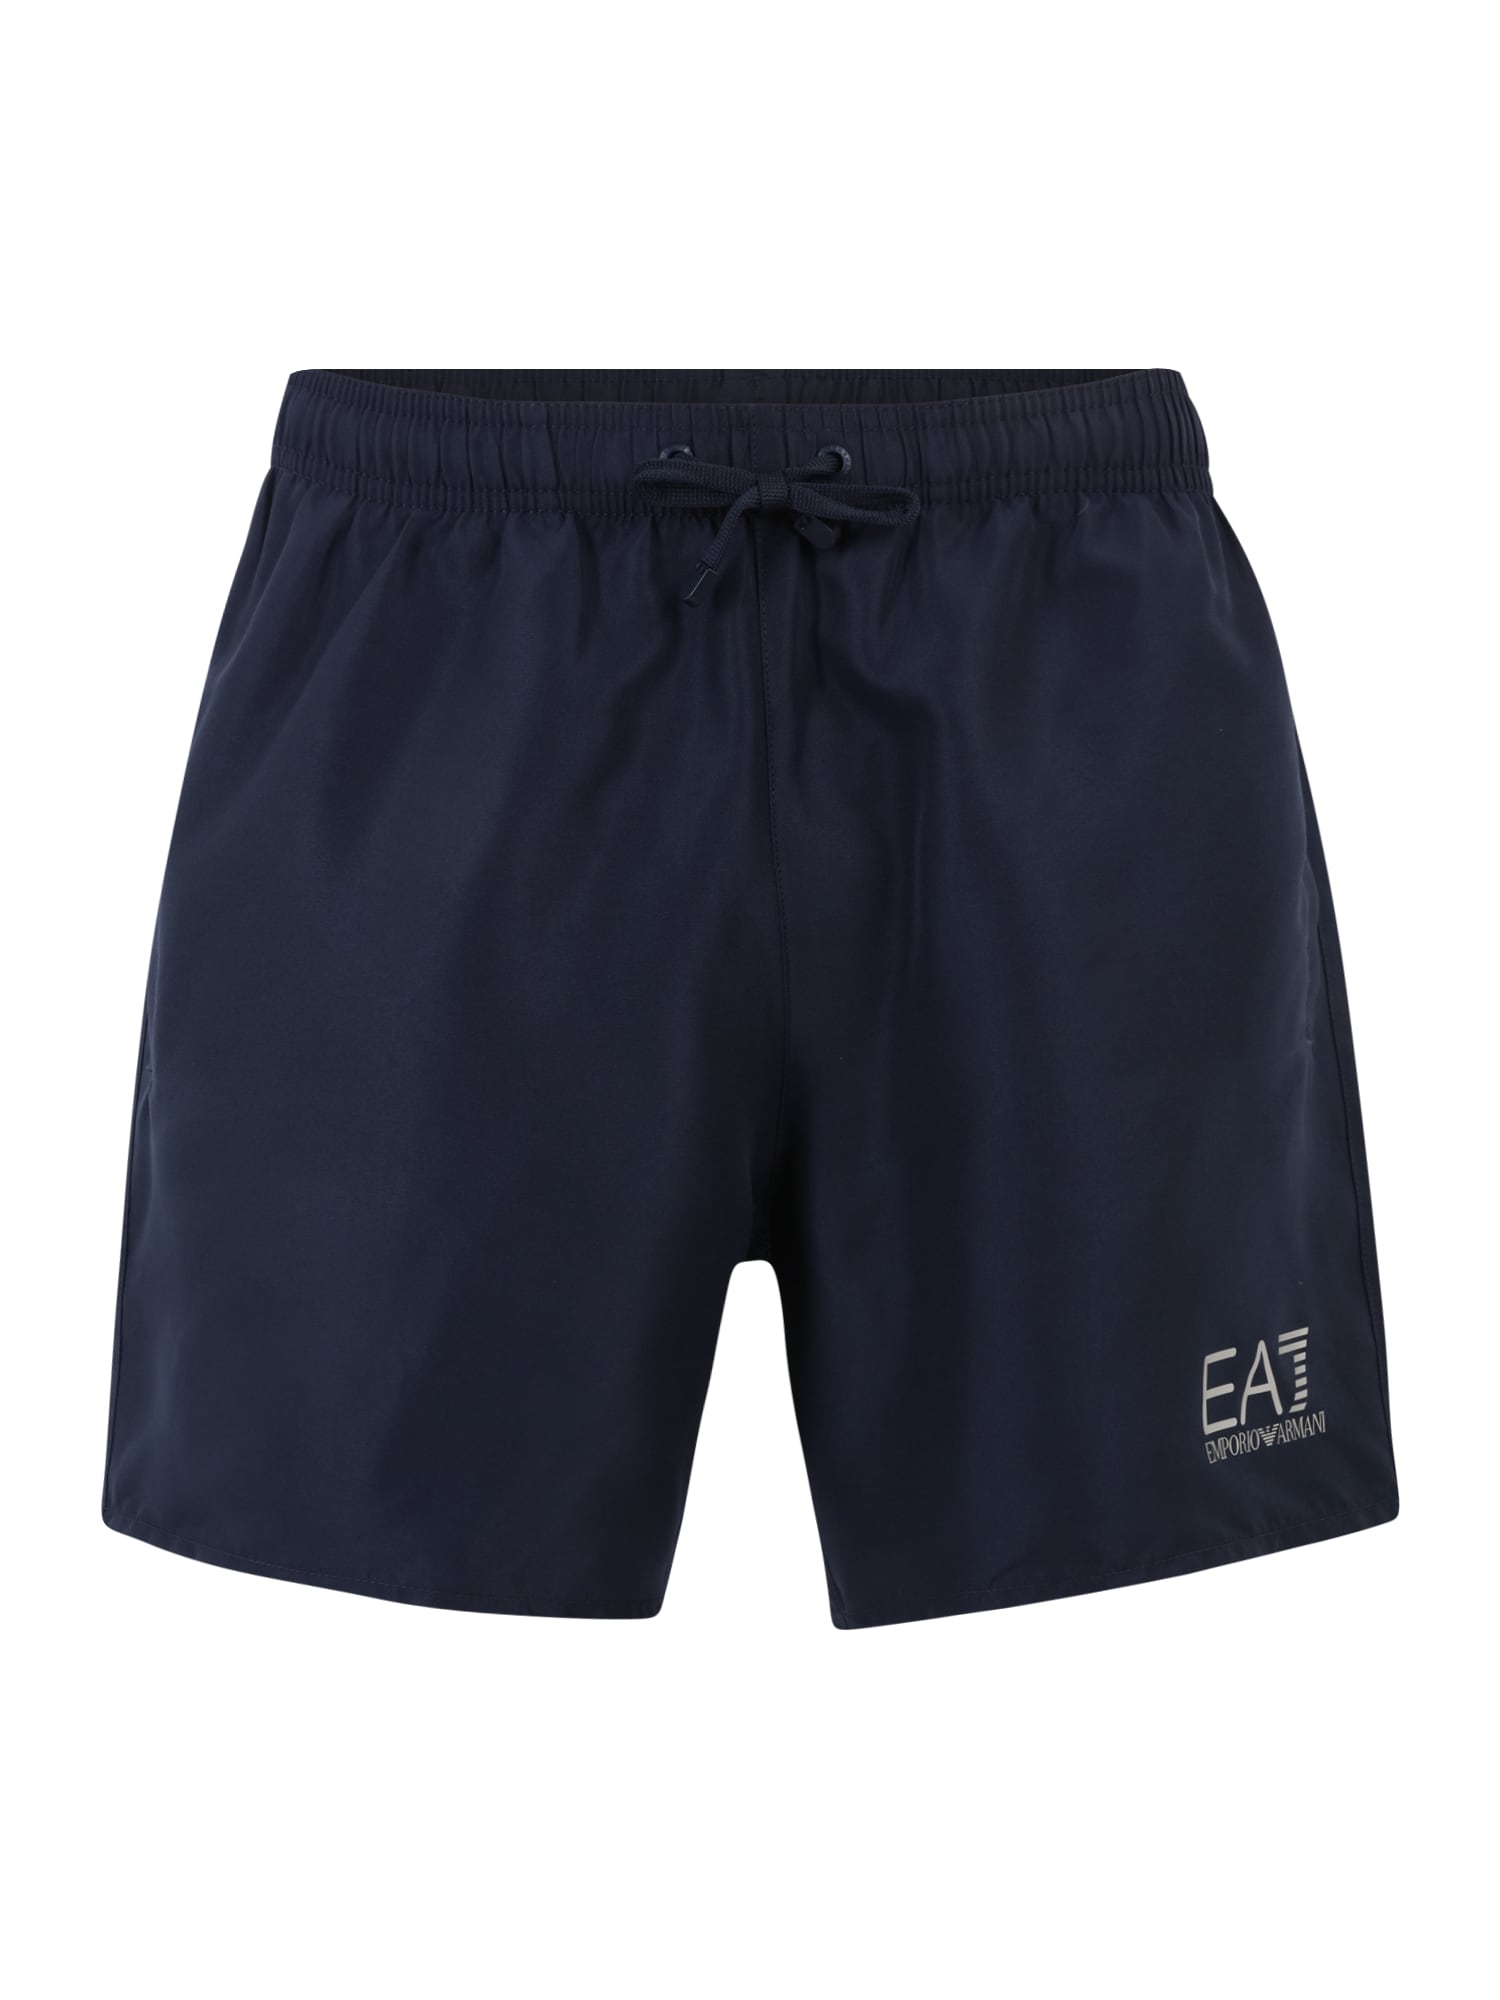 EA7 Emporio Armani Športne kopalne hlače  mornarska / siva